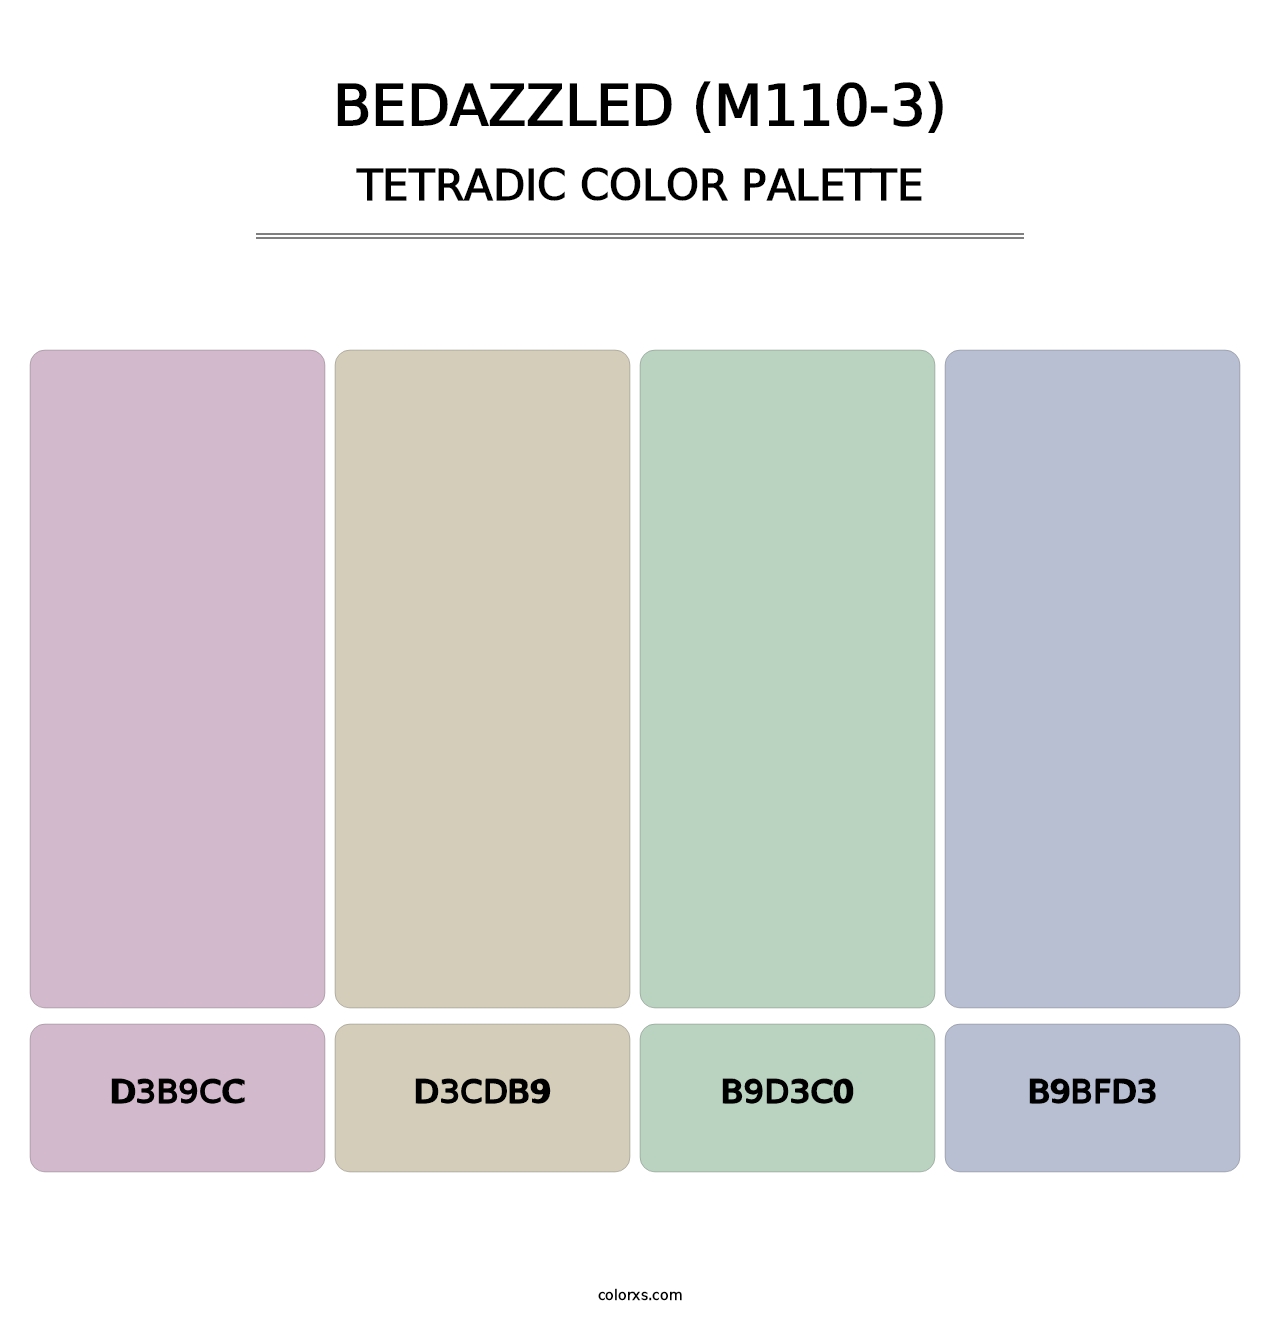 Bedazzled (M110-3) - Tetradic Color Palette